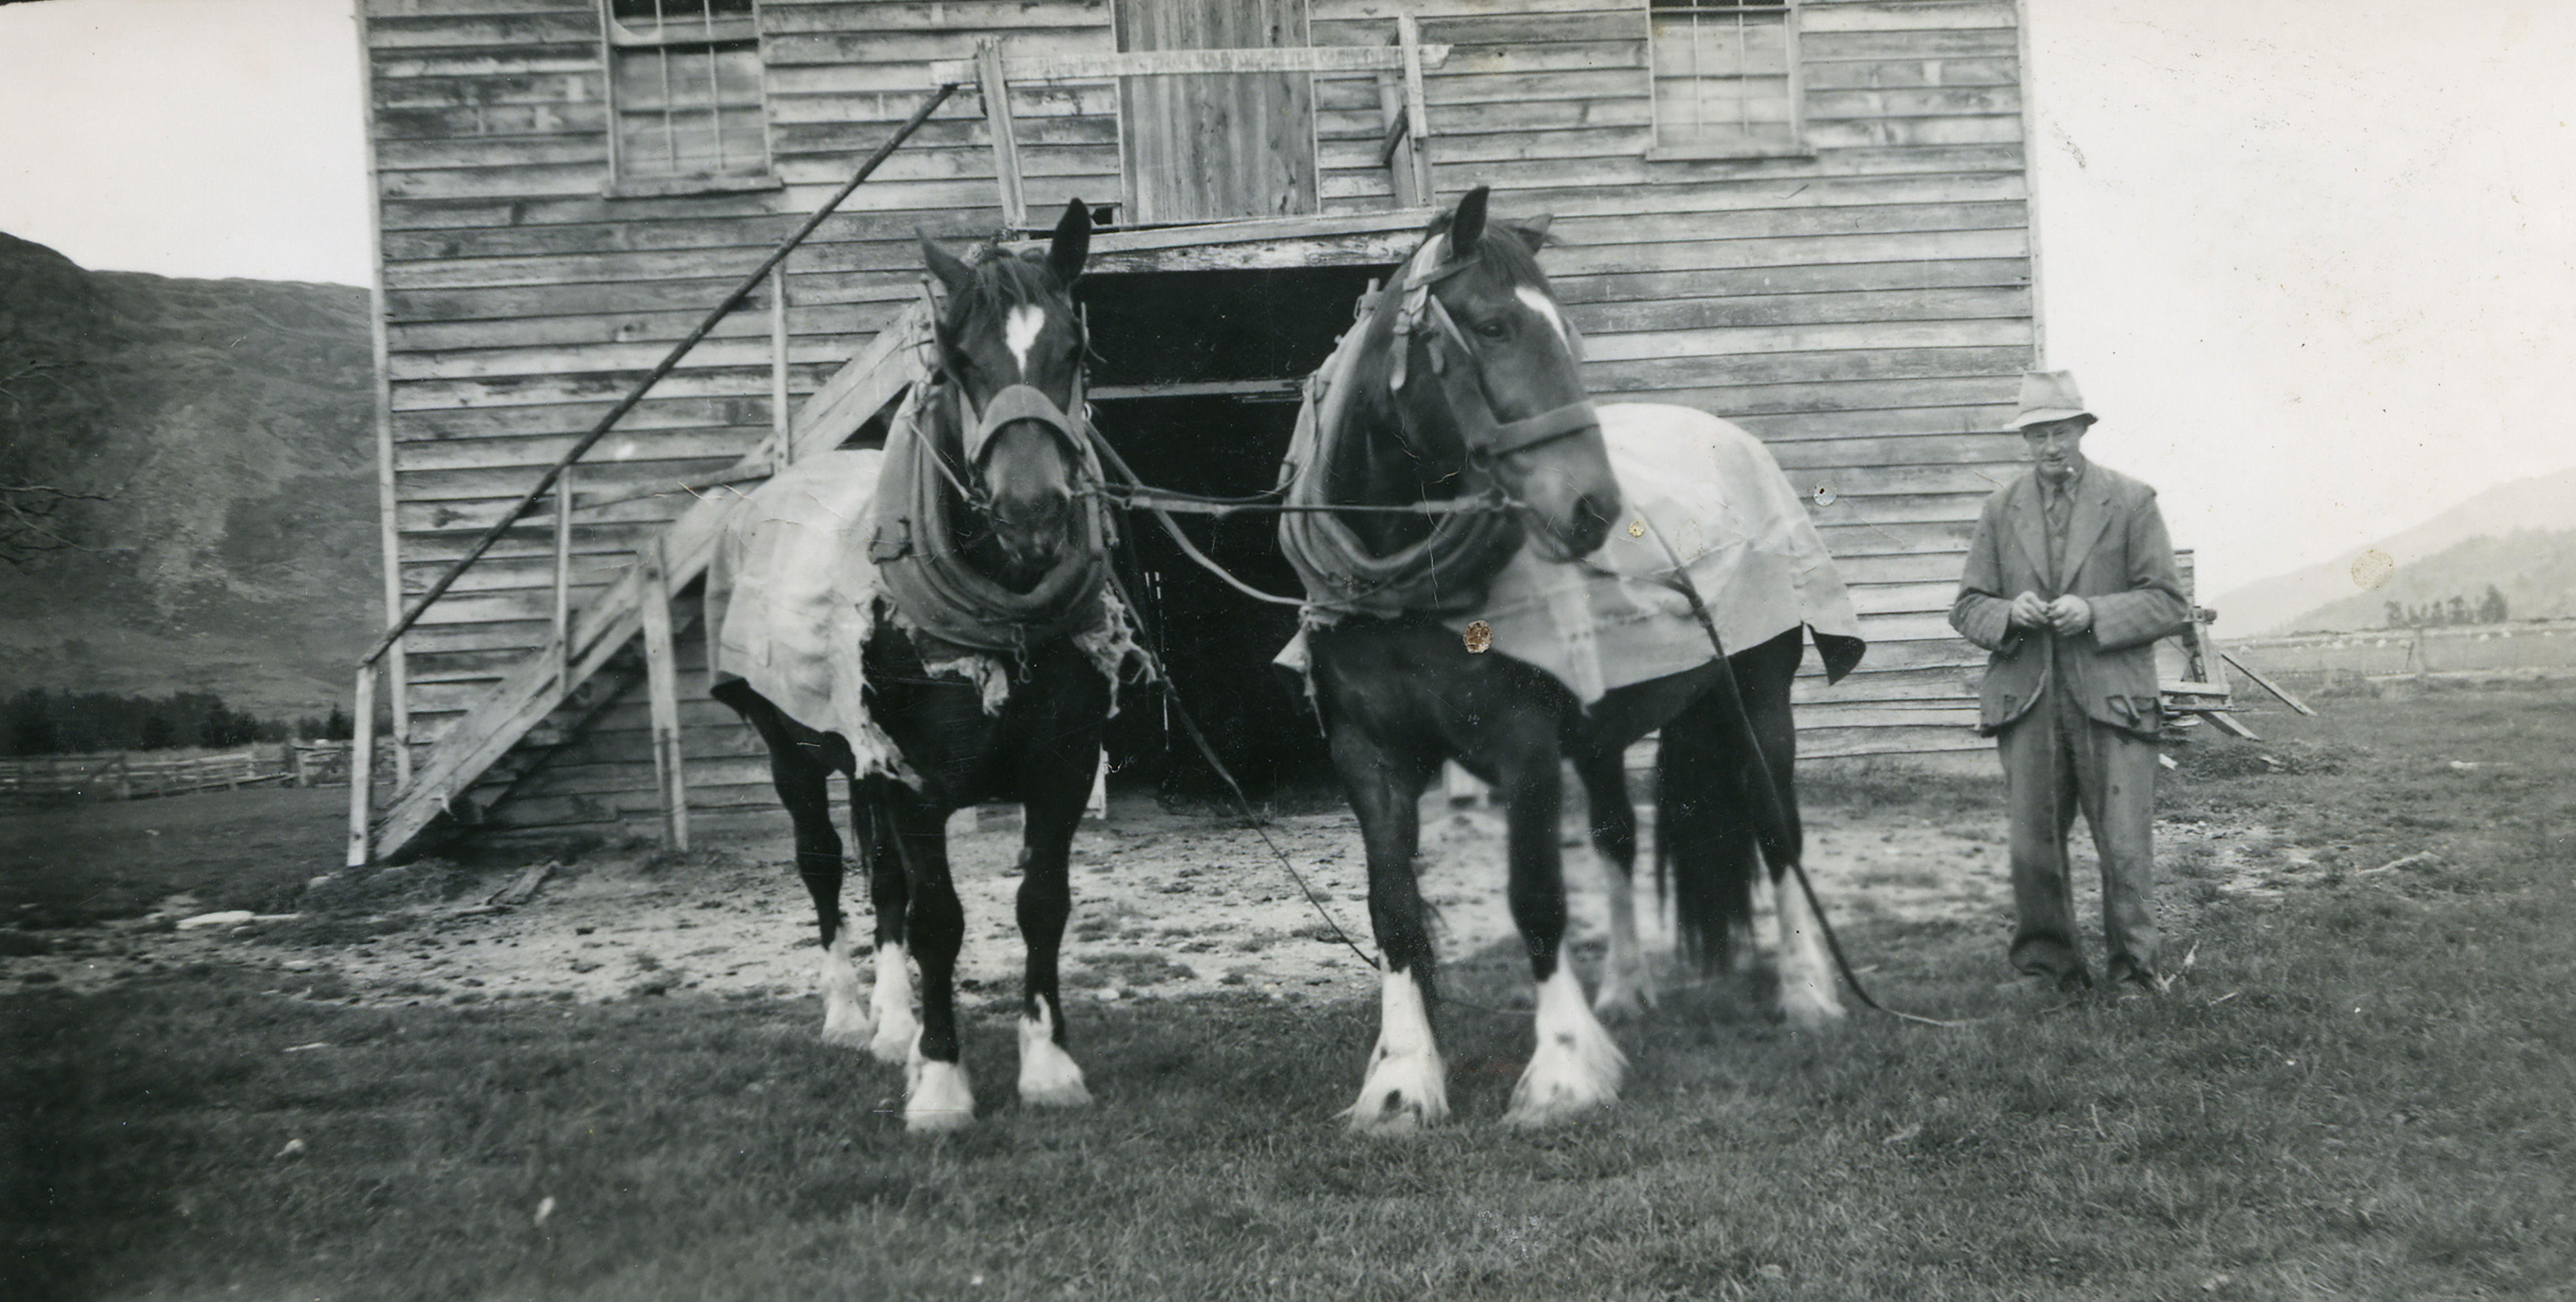 ep3126-chas-hansen-with-2-horses.jpg